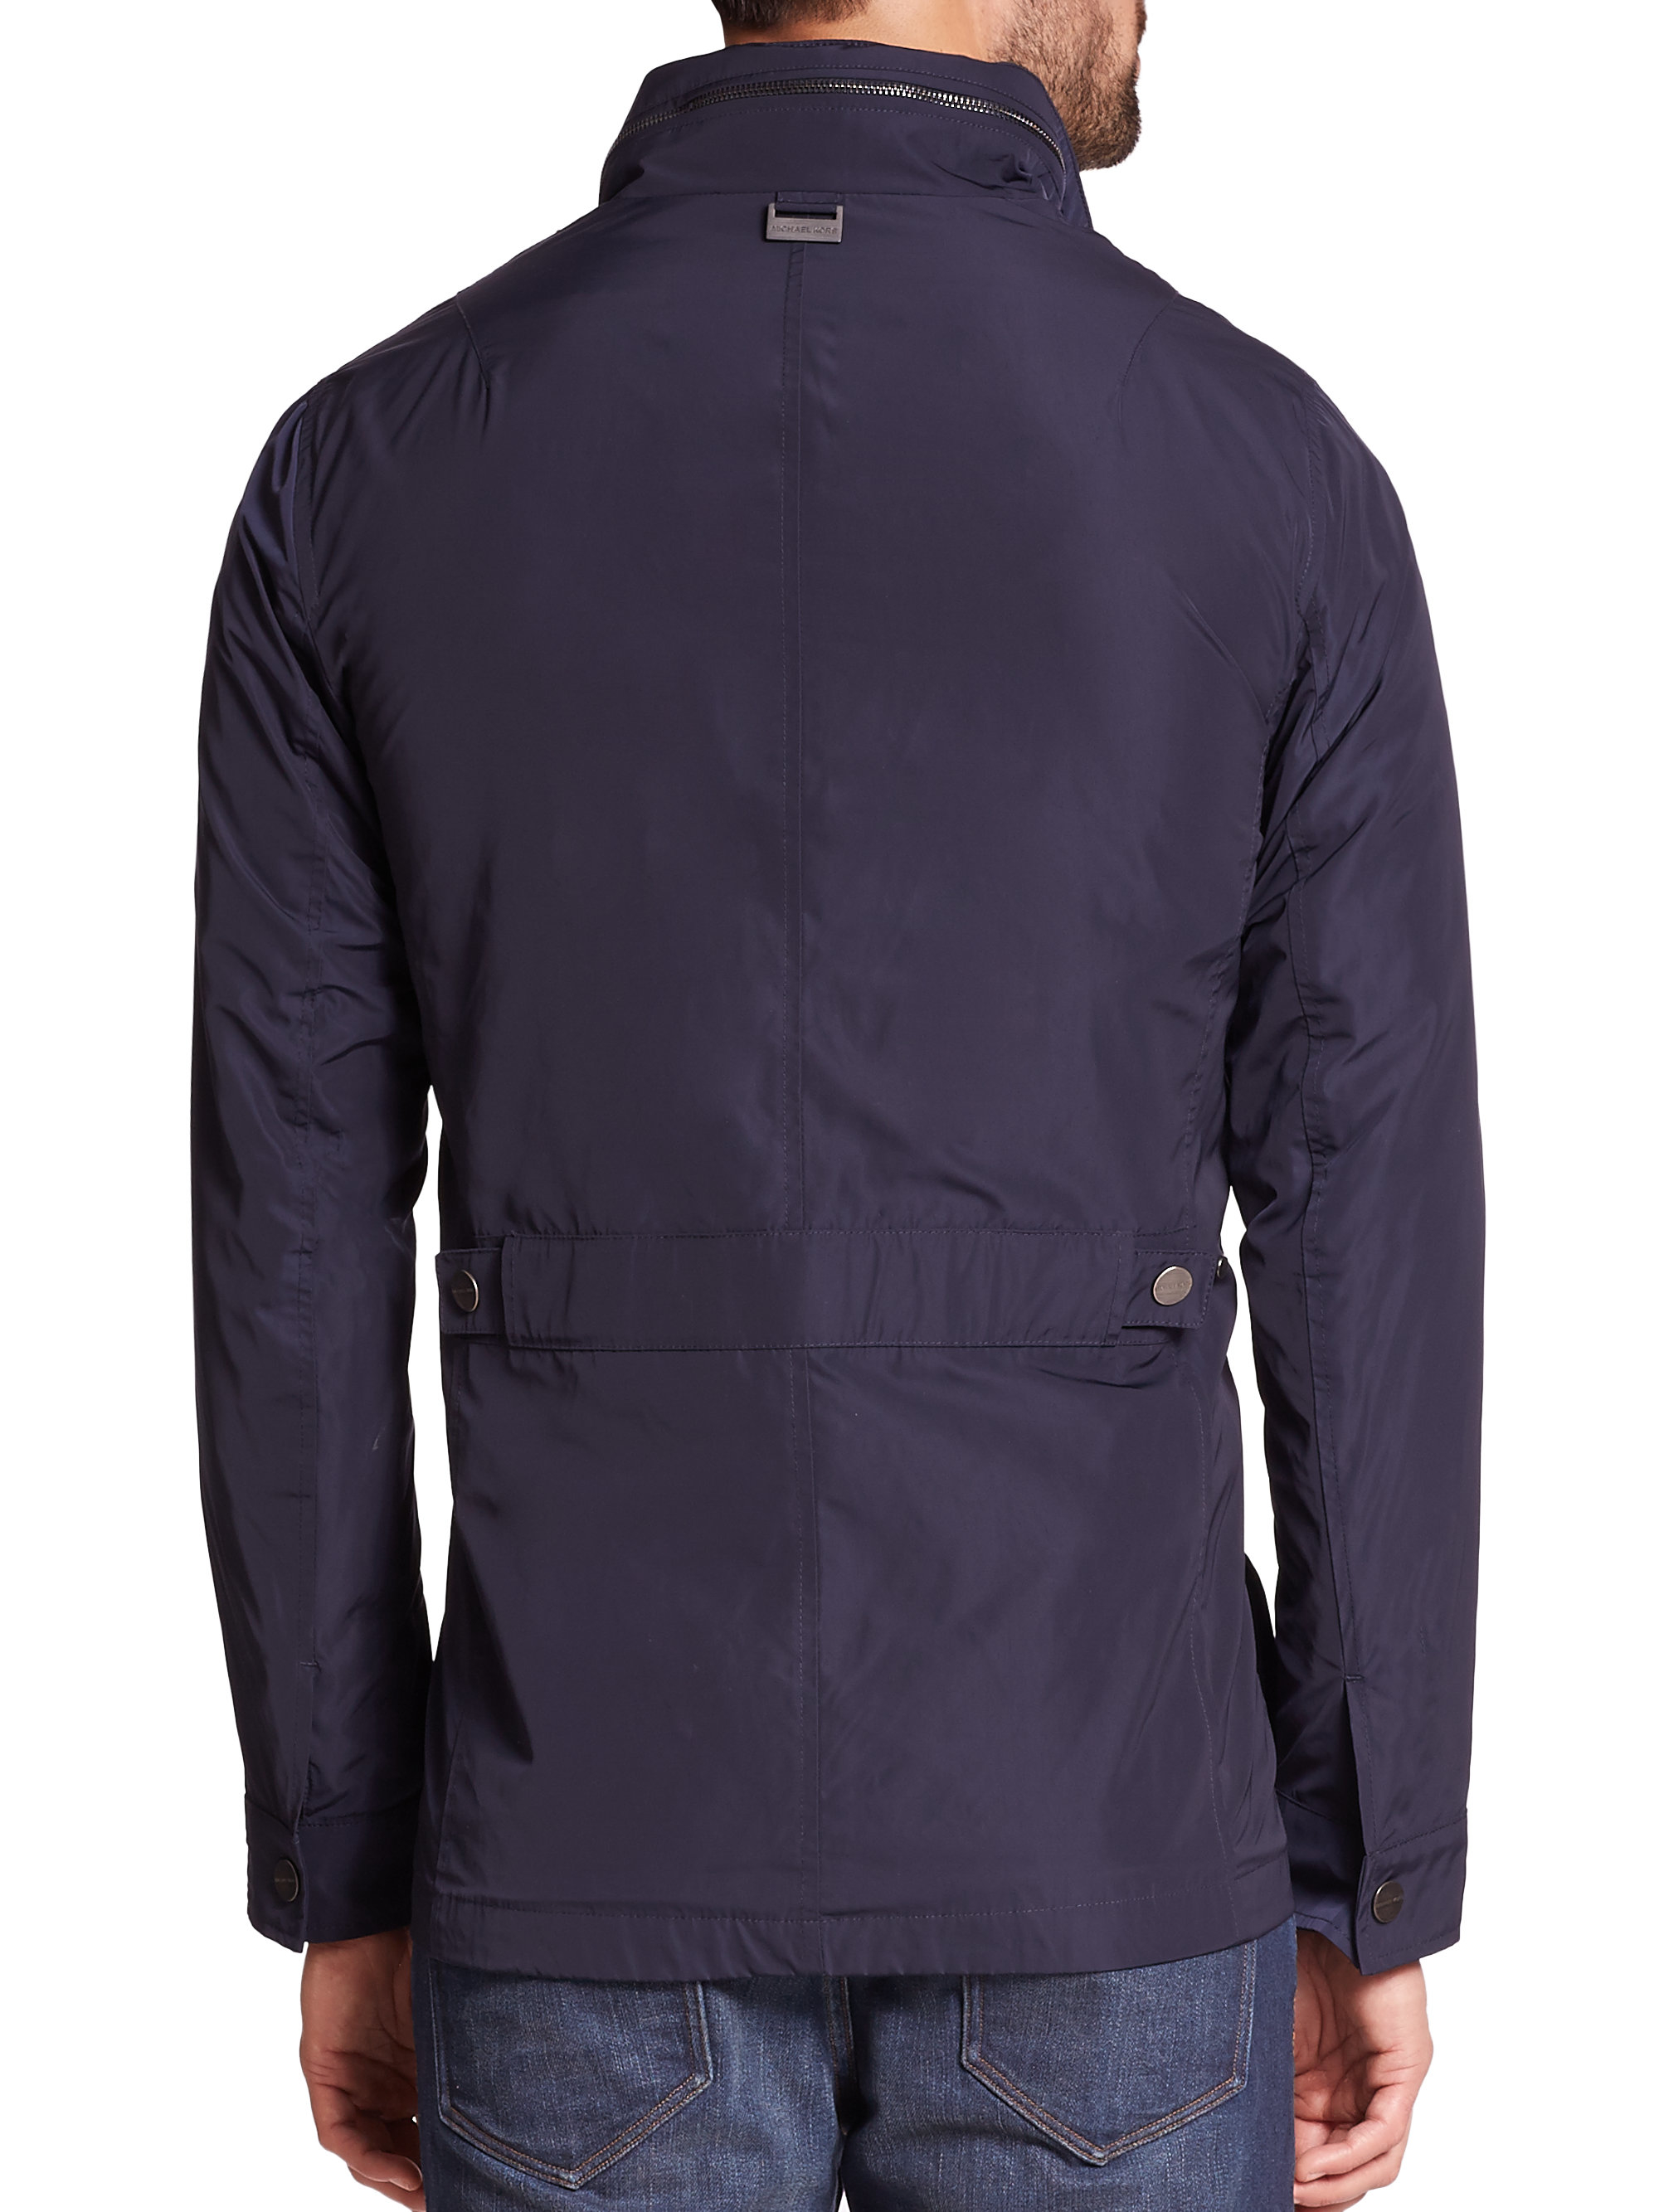 Lyst - Michael Kors Hooded Utility Jacket in Blue for Men